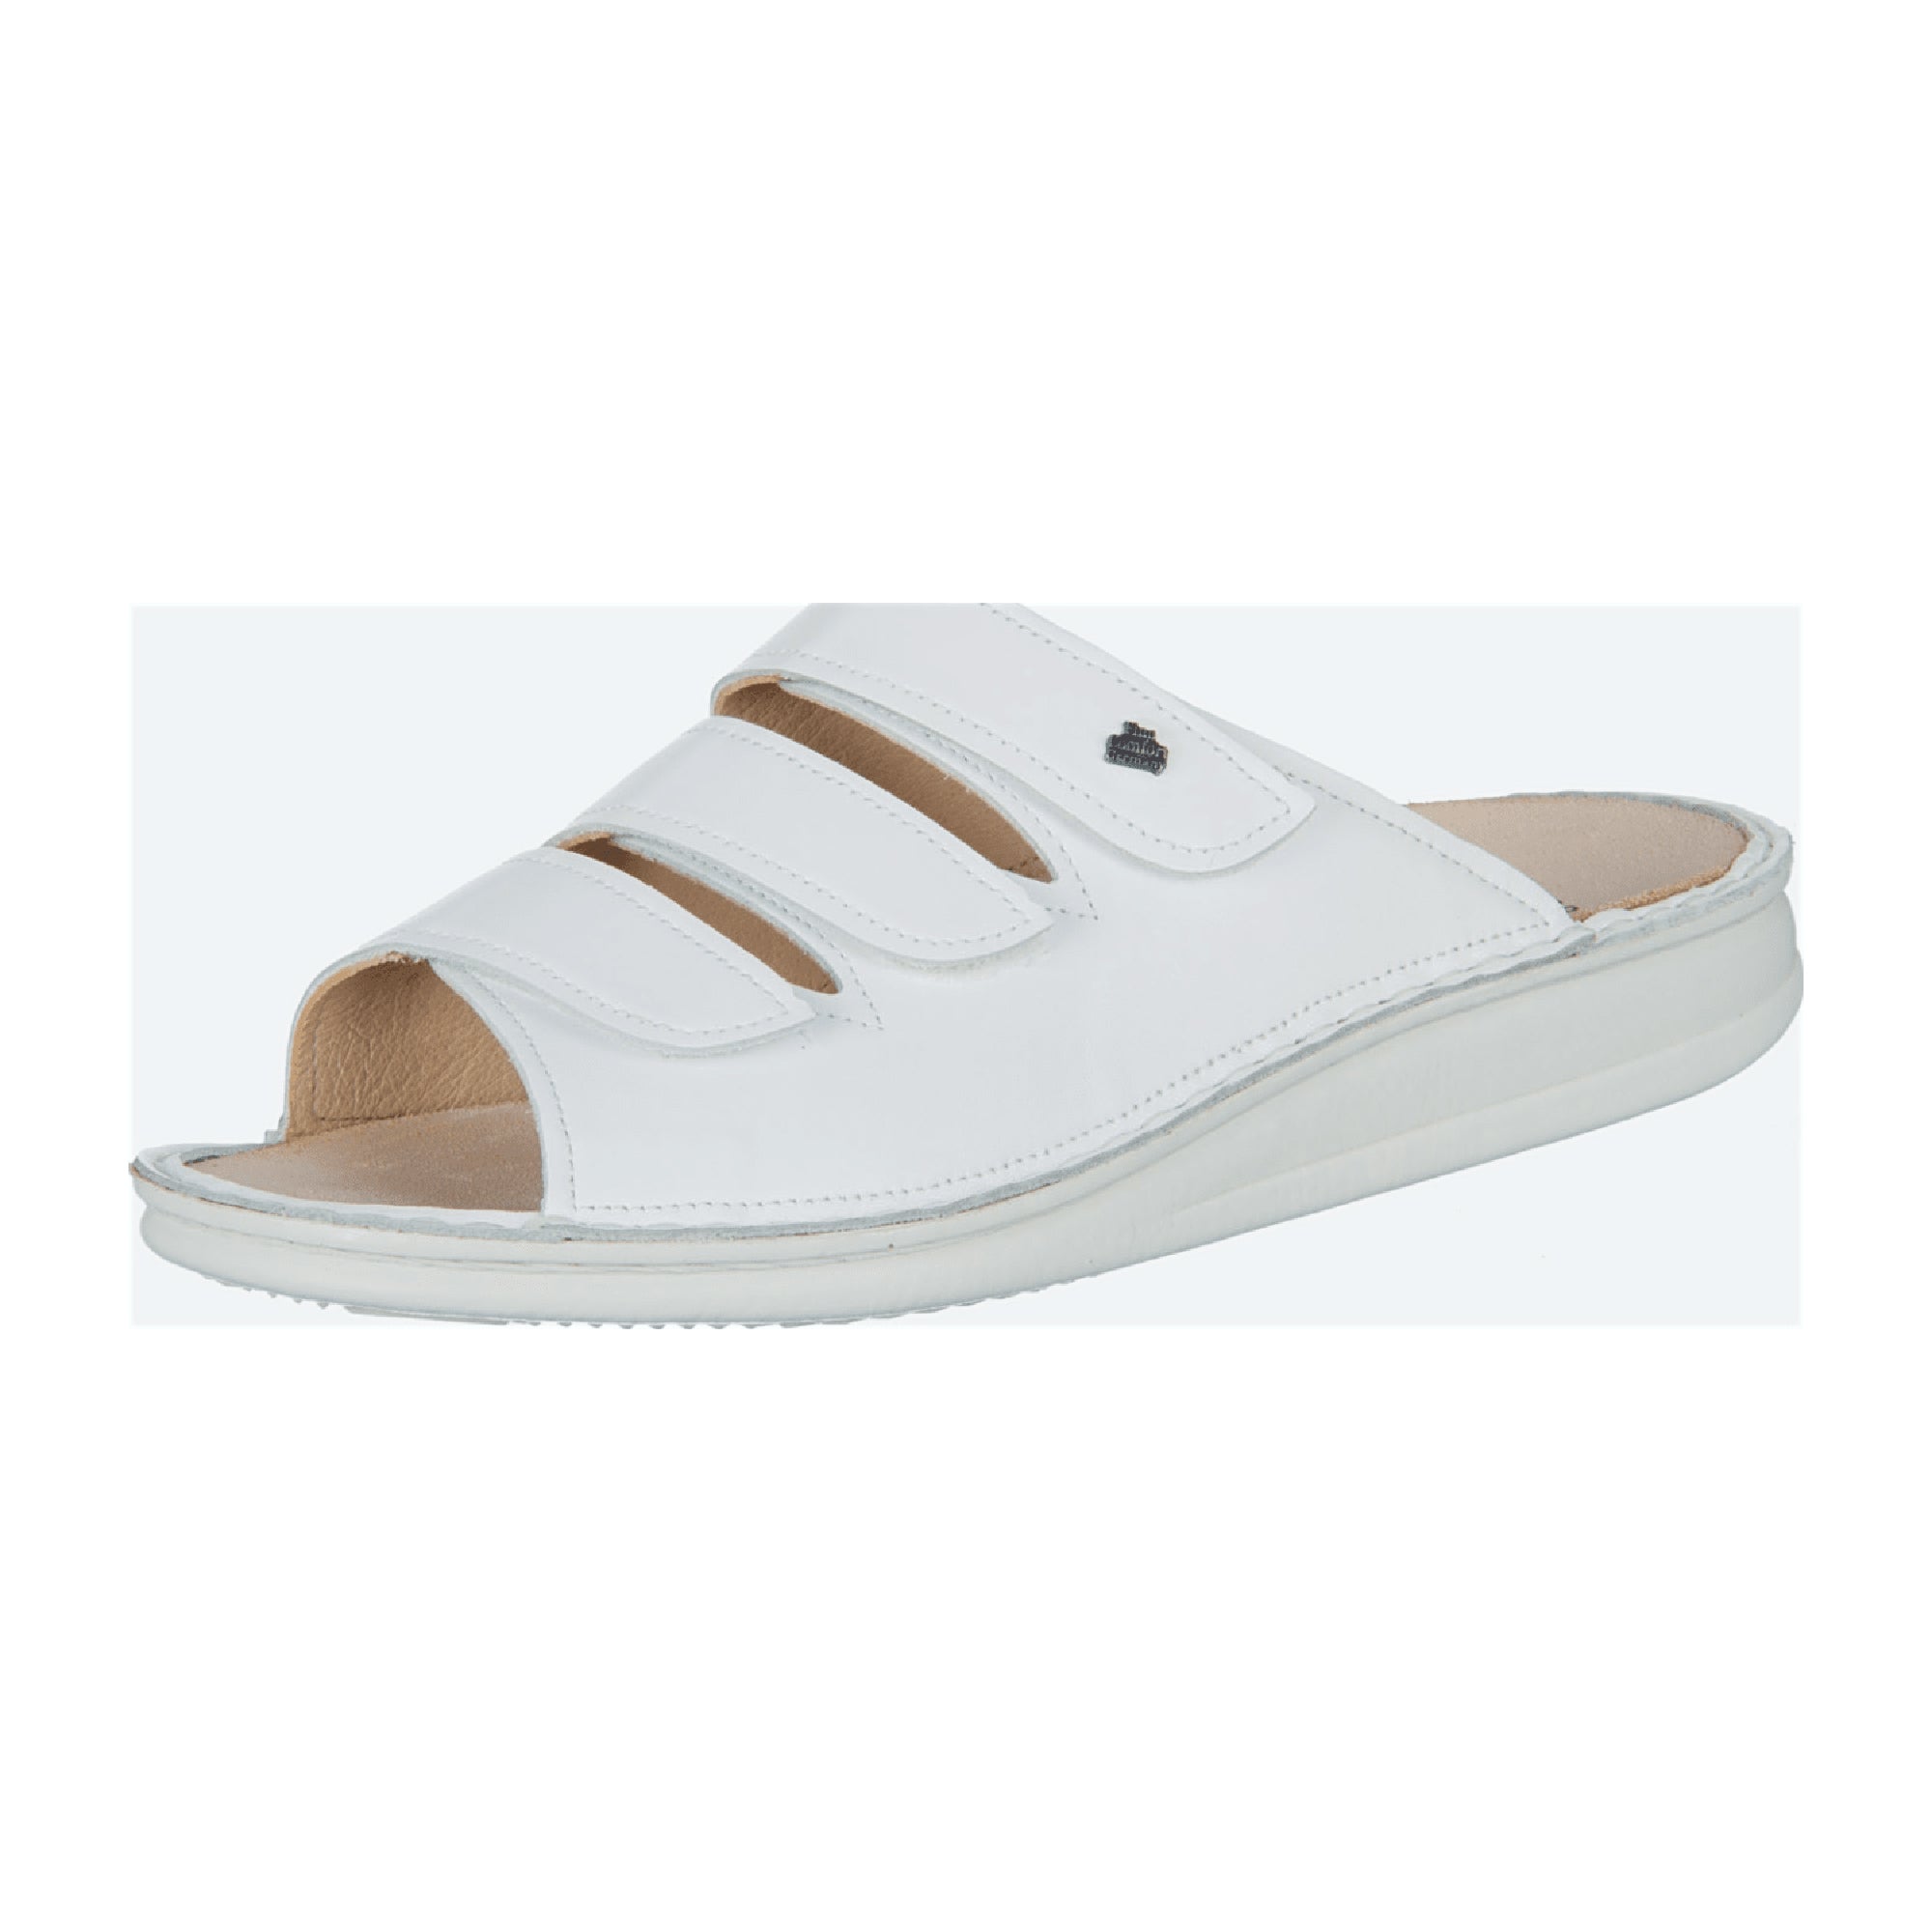 Finn Comfort Korfu Women's White Sandals - Stylish & Comfortable